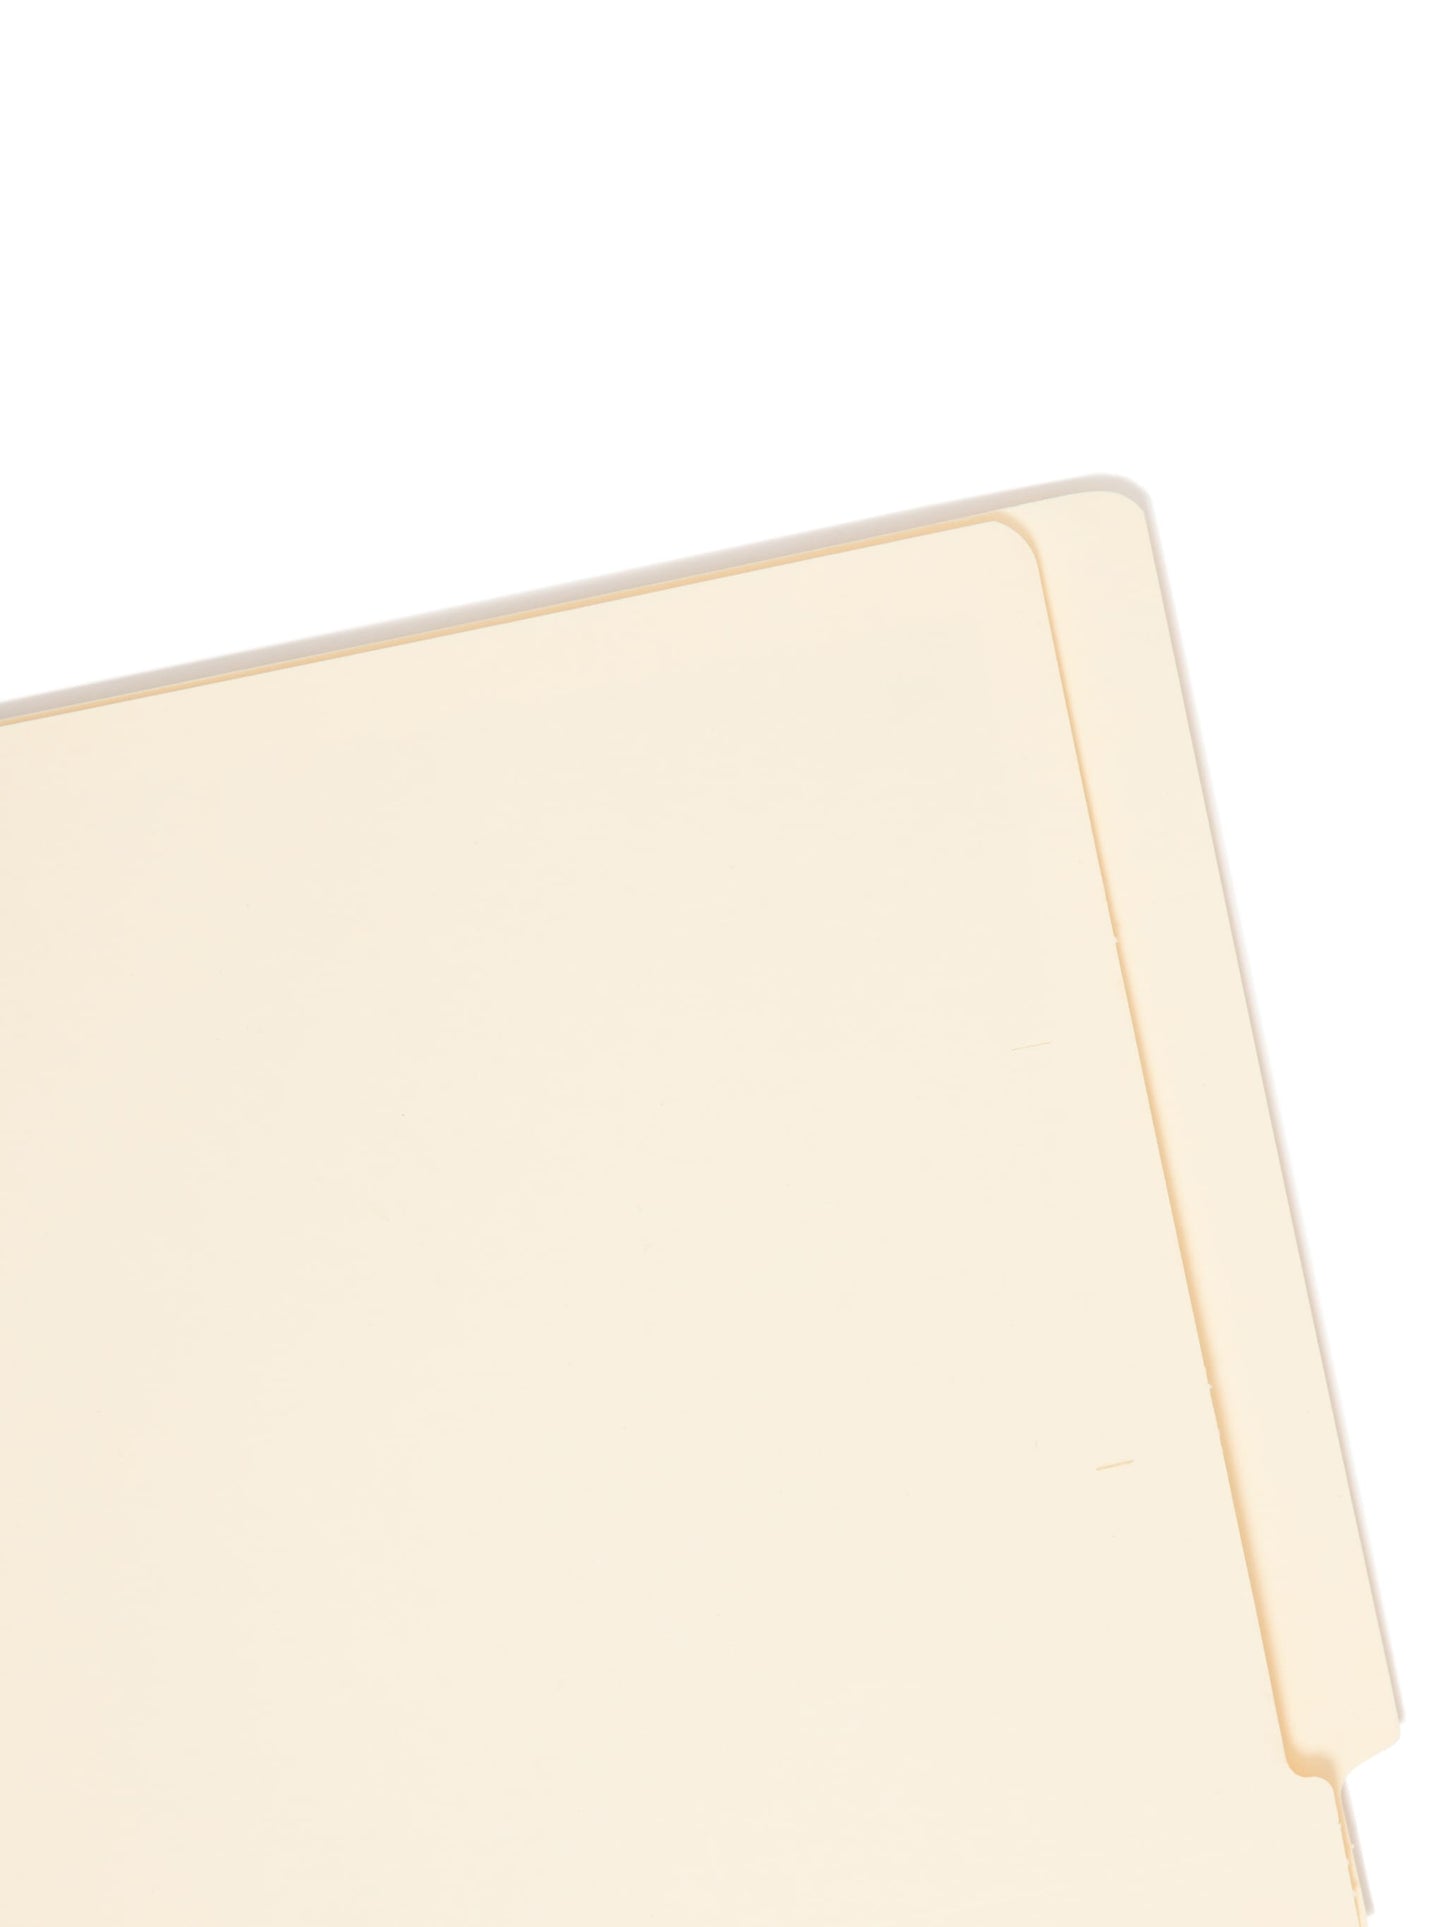 Standard End Tab File Folders, Straight-Cut Tab, Manila Color, Letter Size, Set of 100, 086486241007